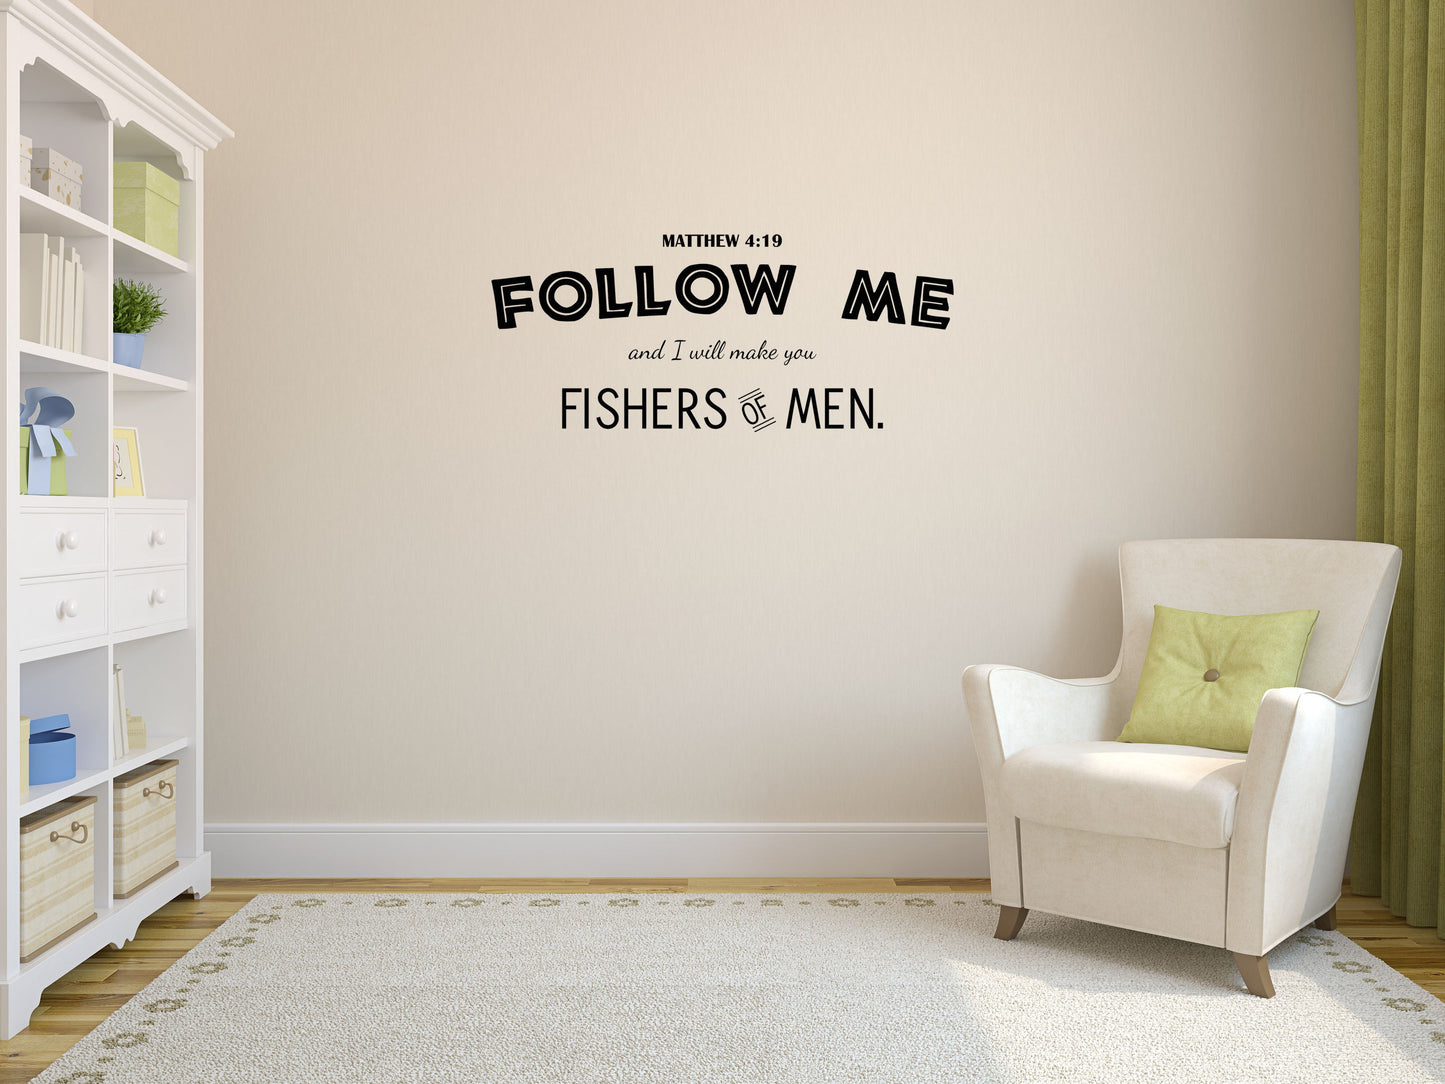 Fishers Of Men - Inspirational Wall Decals Vinyl Wall Decal Inspirational Wall Signs 